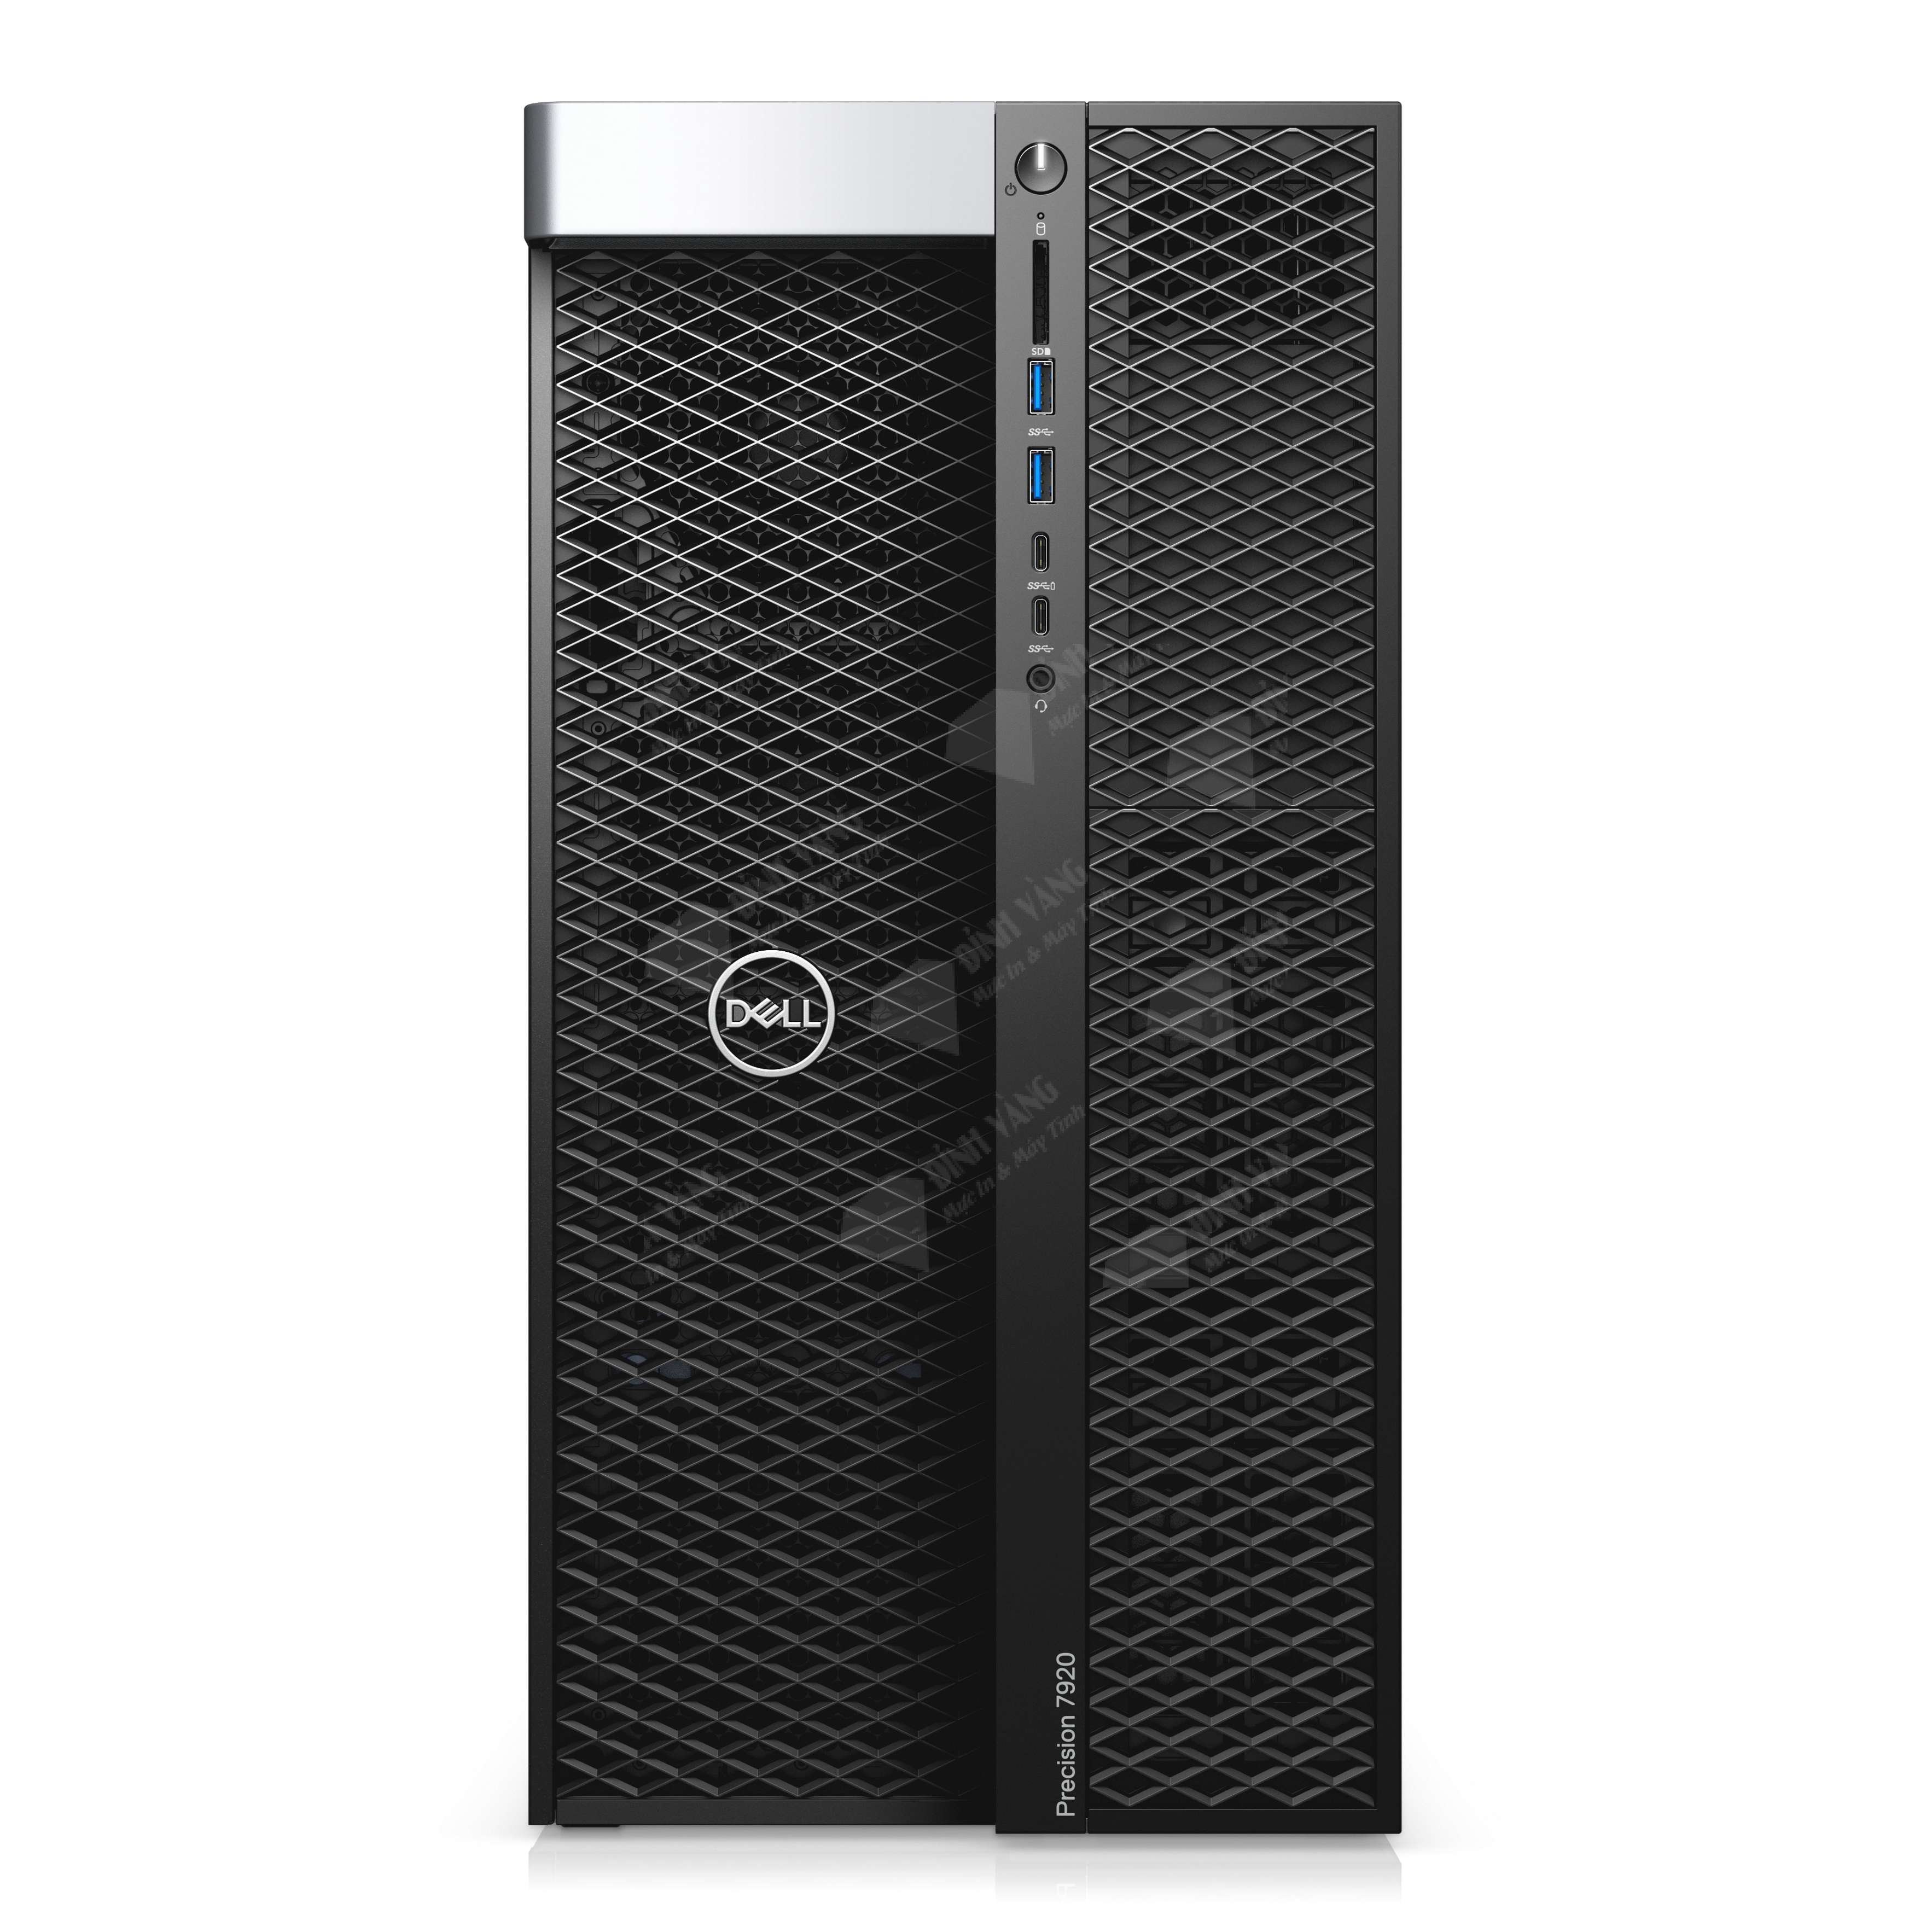 PC Dell Workstation Precision 7920 Tower 42PT79D010 (Intel Xeon Bronze 3104, Ram 16GB, HDD 2TB, NVIDIA Quadro P2200 5GB, Win10 Pro, 3Y)